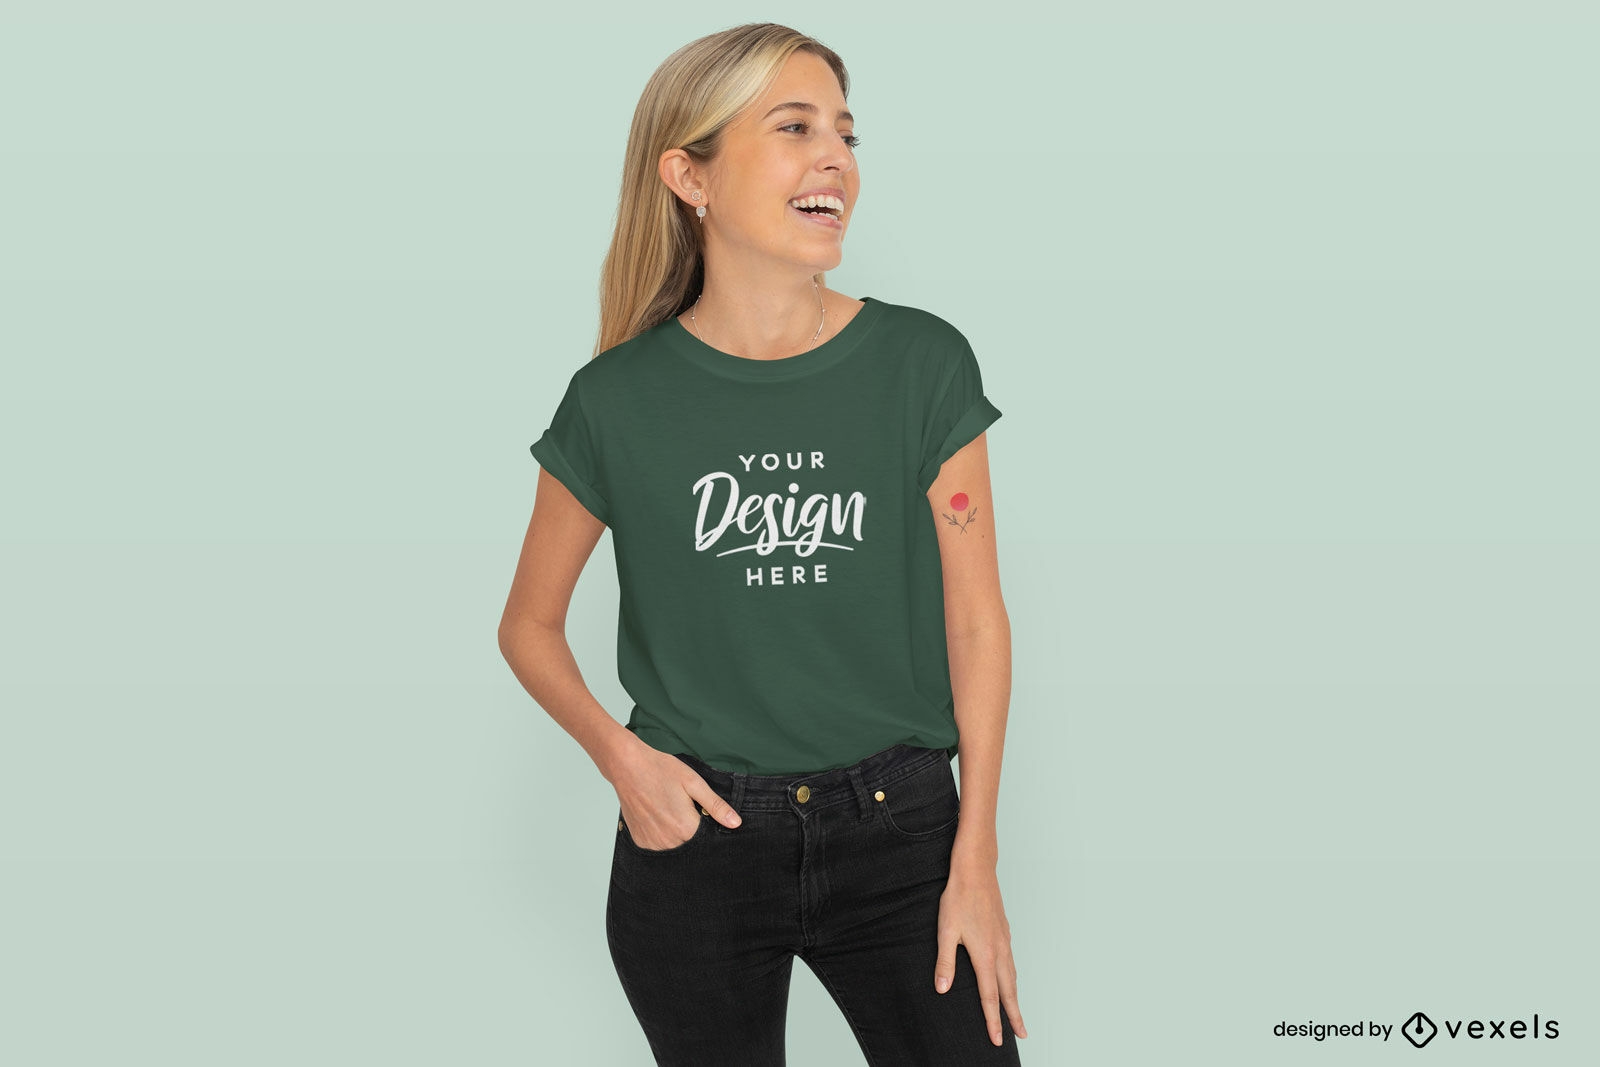 Blonde woman laughing t-shirt mockup